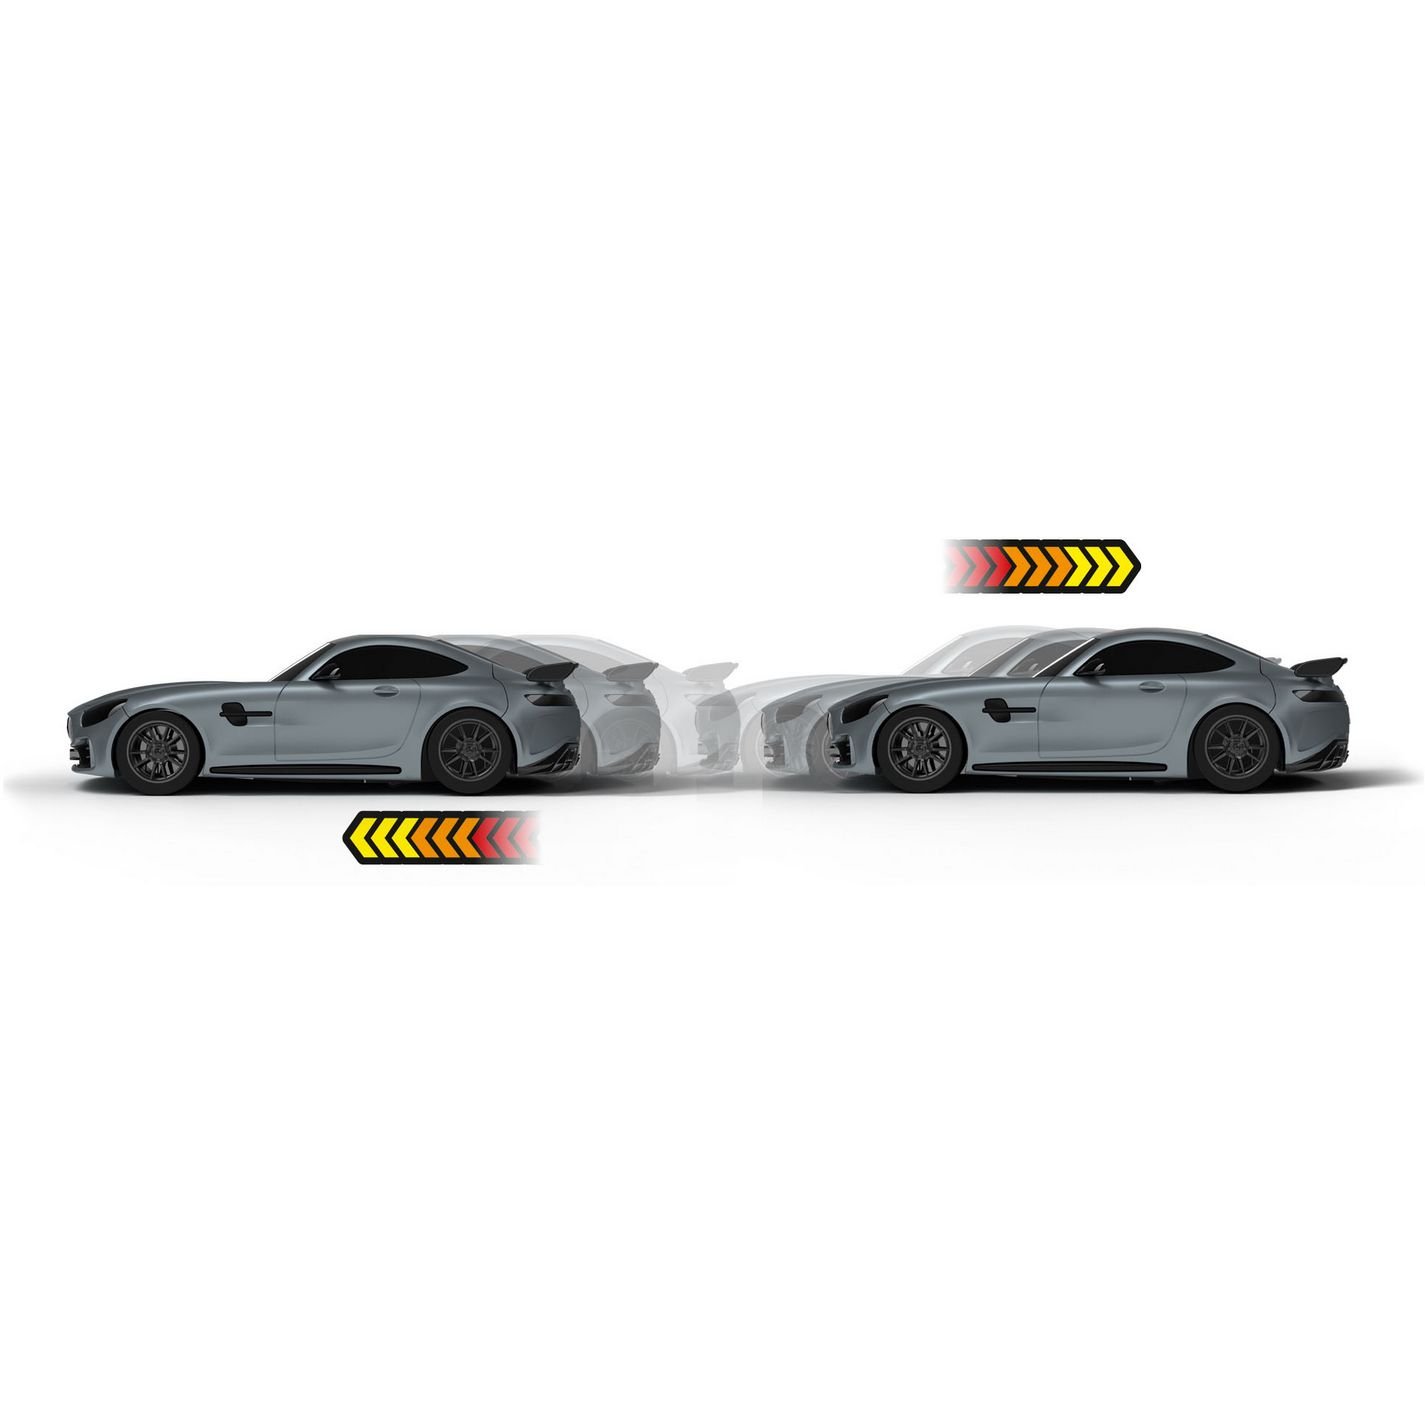 Збірна модель Revell Mercedes-AMG GT R, Grey Car, рівень 1, масштаб 1:43, 10 деталей (RVL-23152) - фото 4